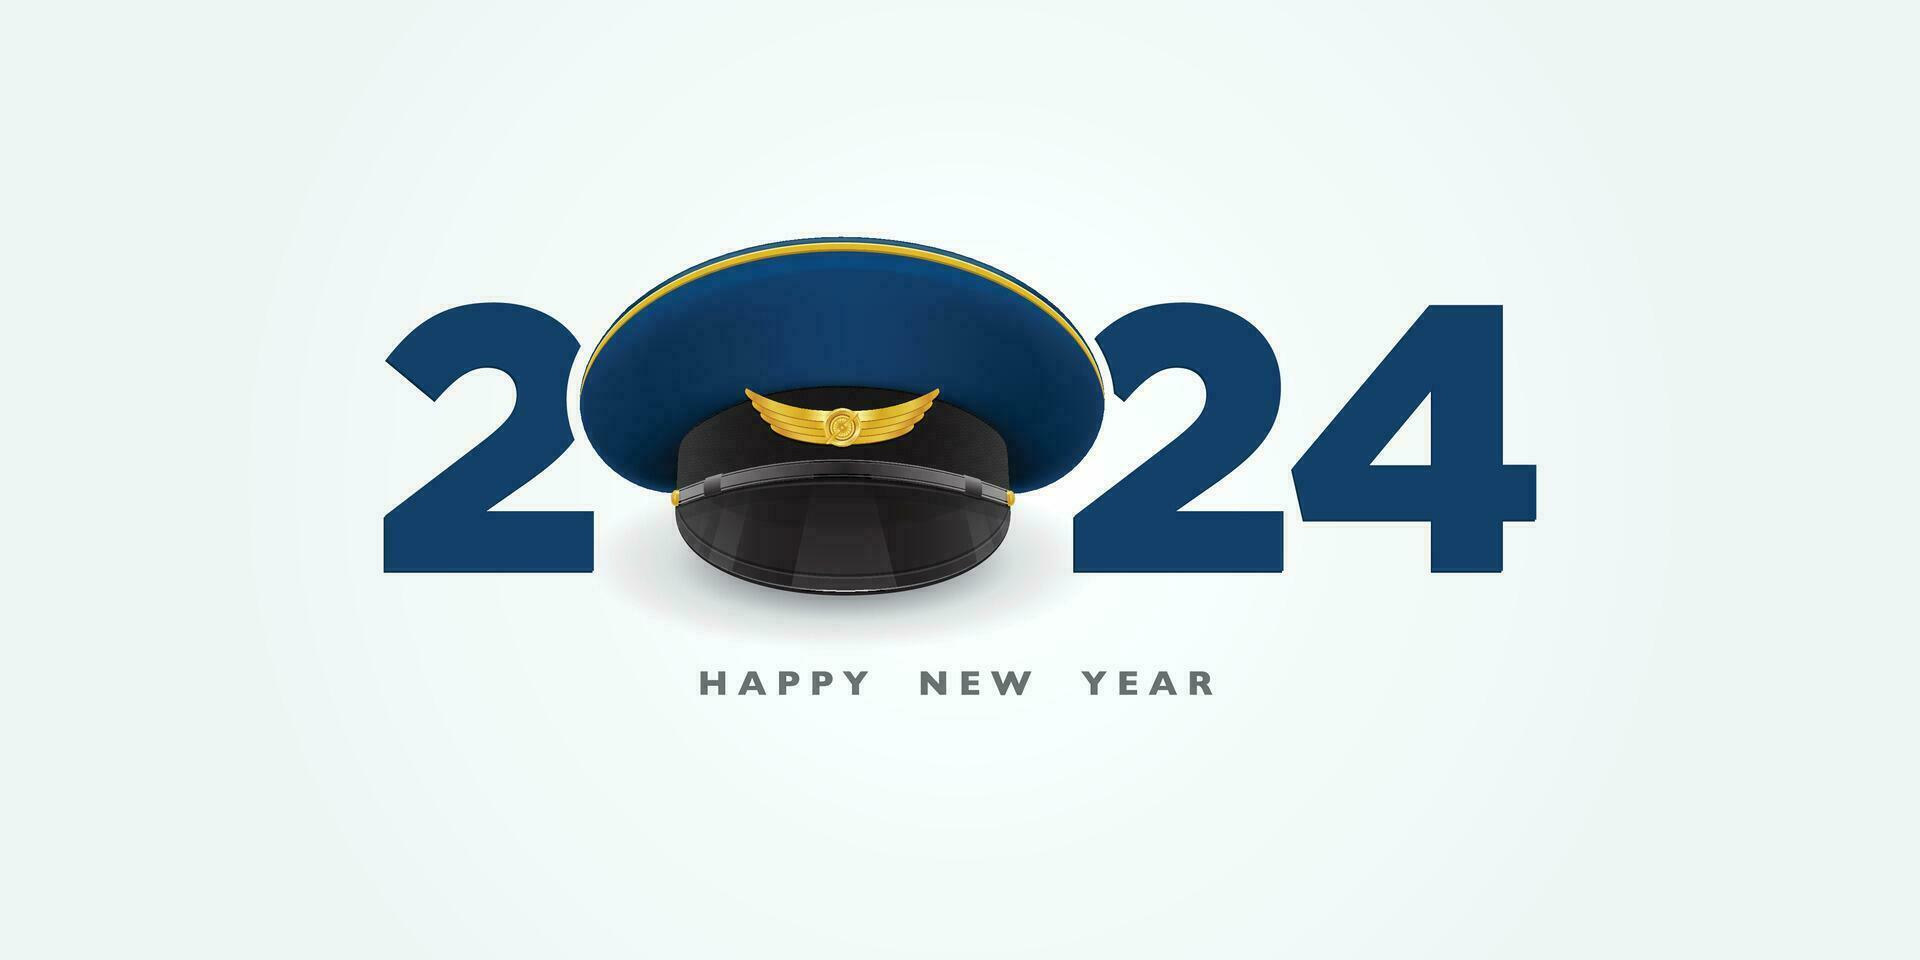 contento nuevo año 2024 número con piloto capitán gorra en un aislado blanco antecedentes. avión, capitán, piloto, aeroplan personal nuevo año concepto vector